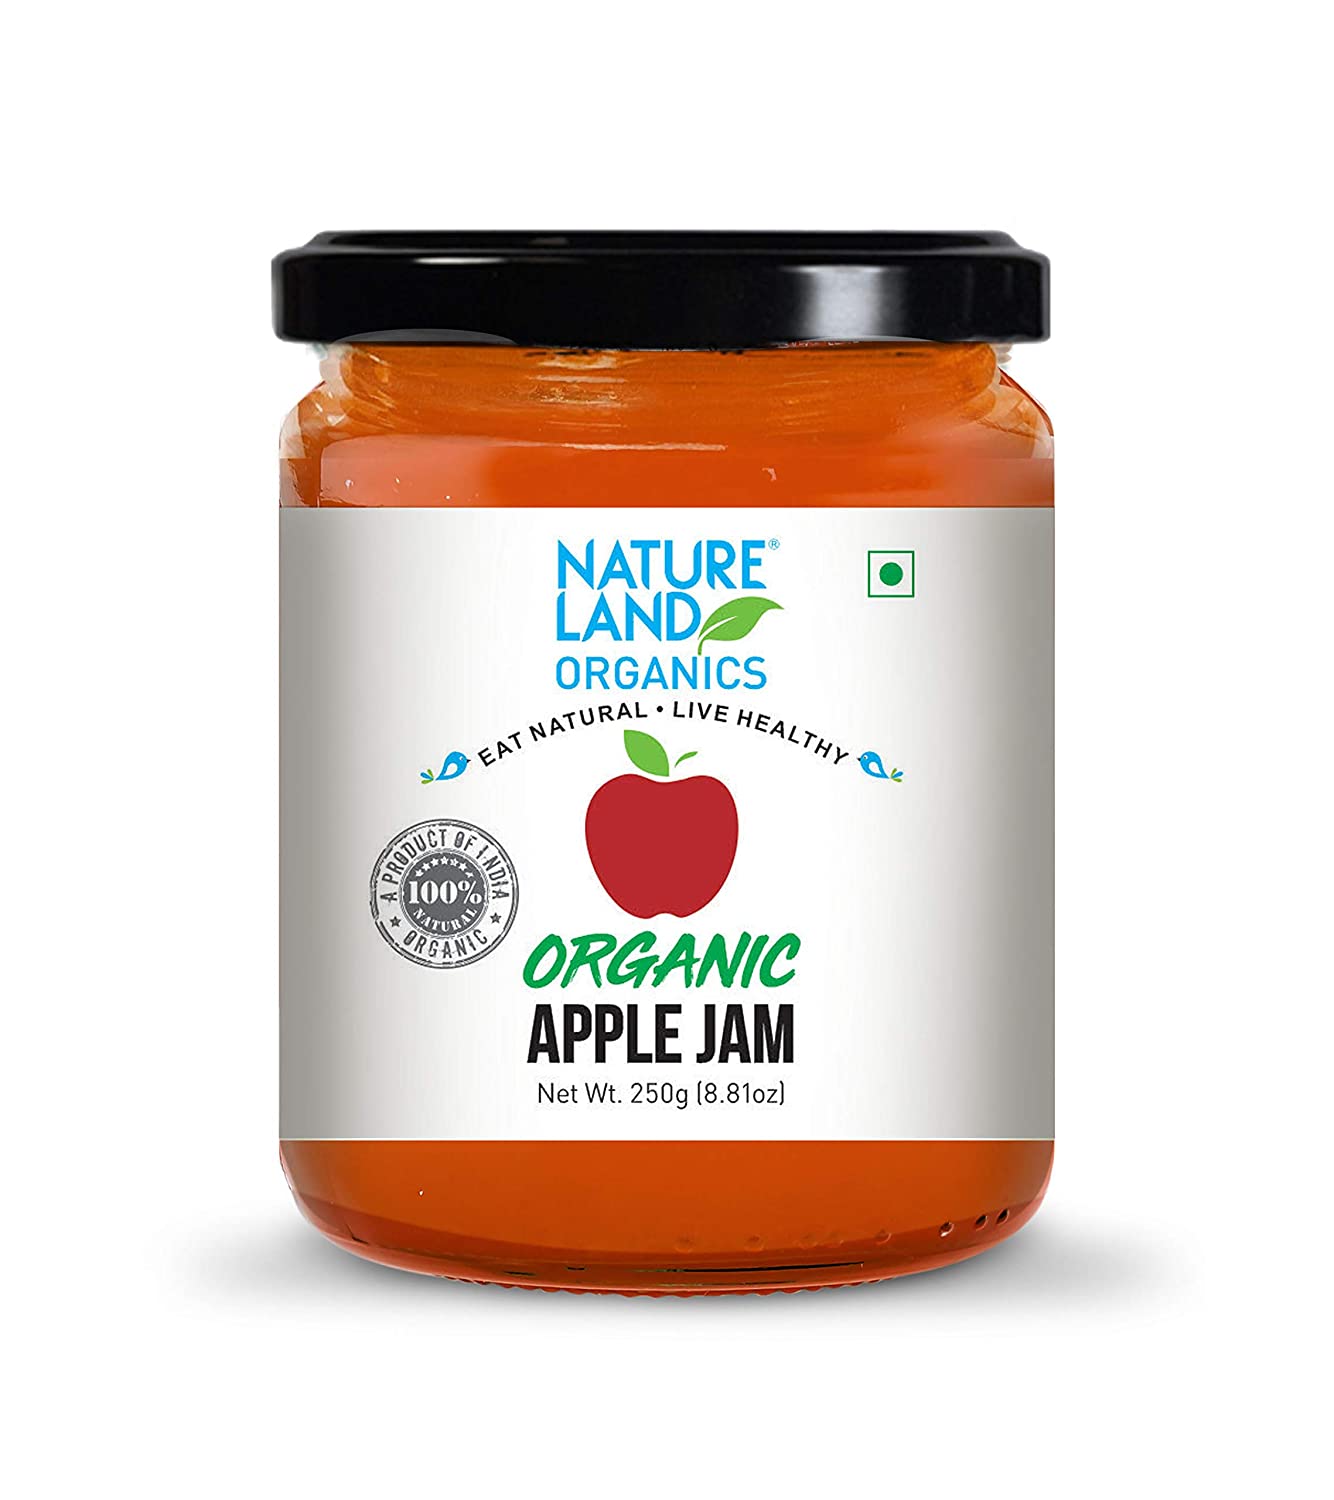 Natureland Organics Apple Jam Image